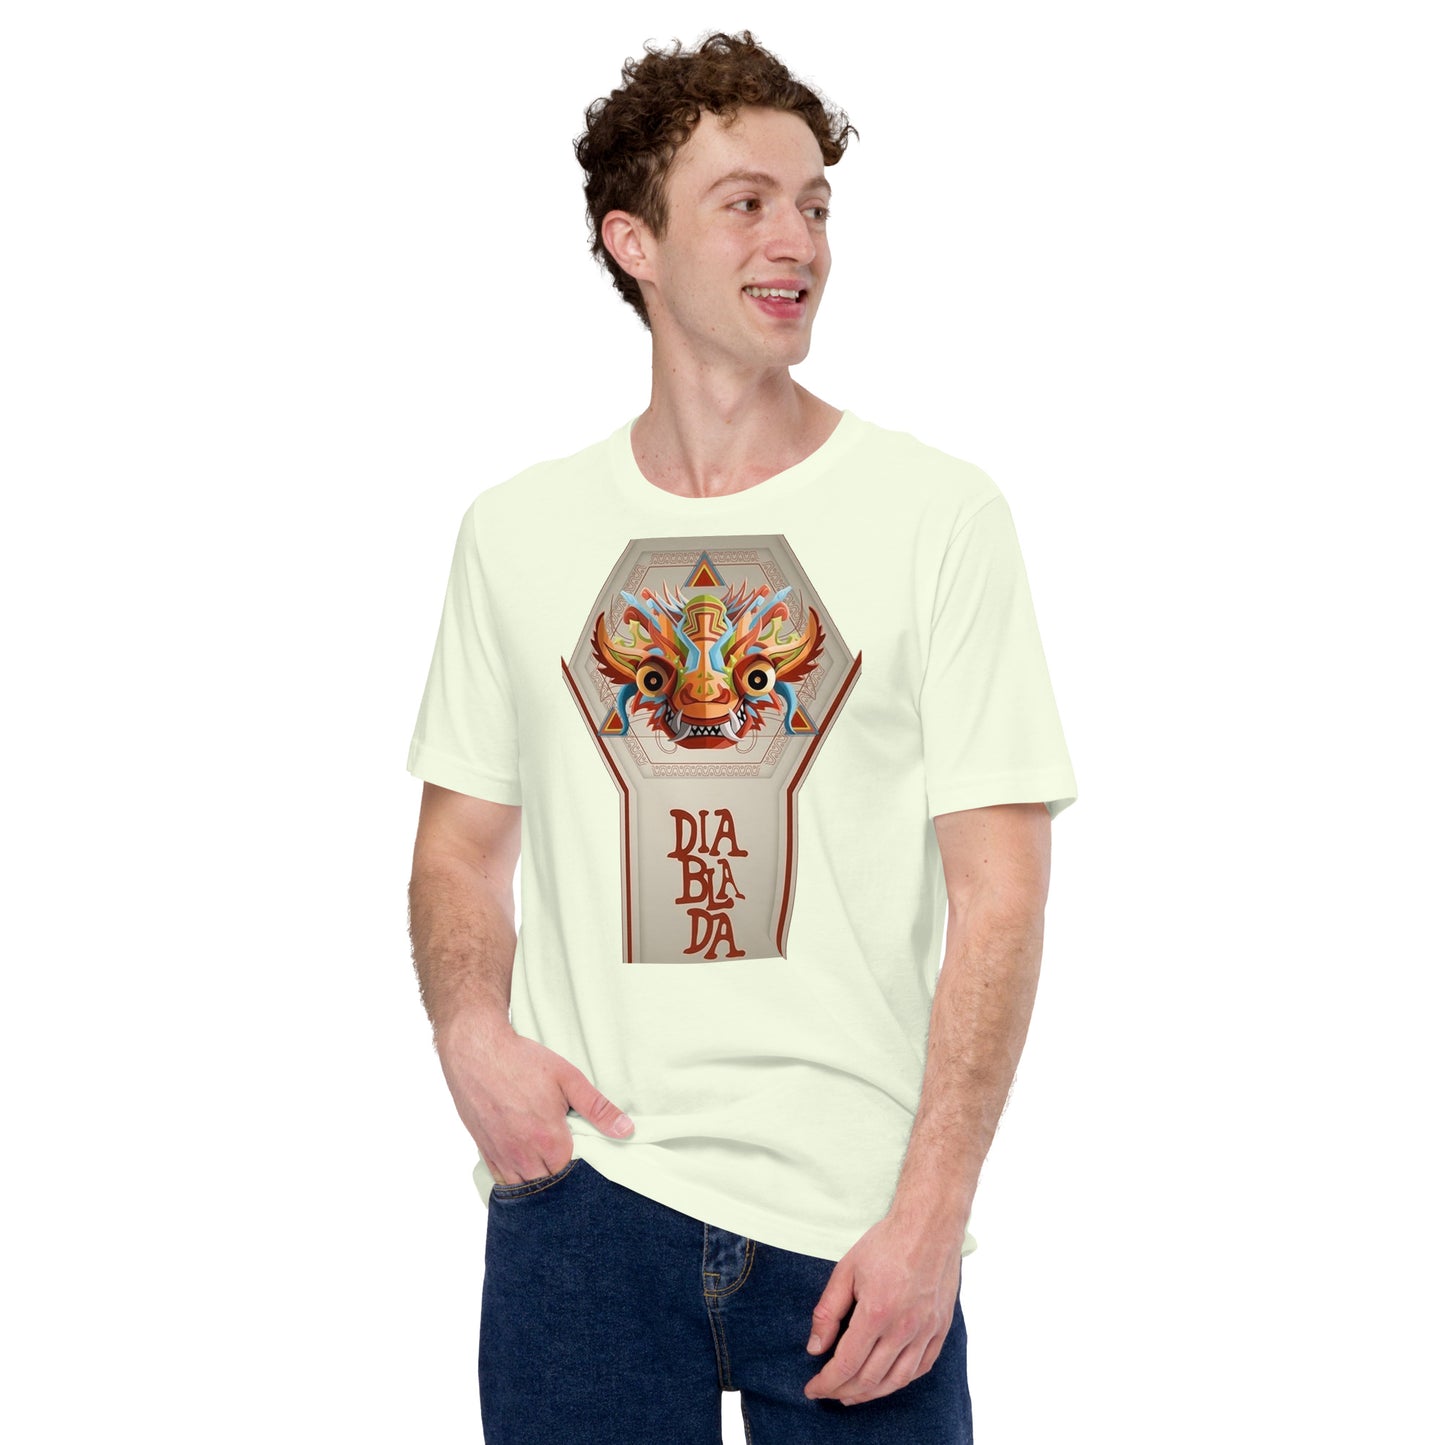 Diablada peru - Unisex t-shirt